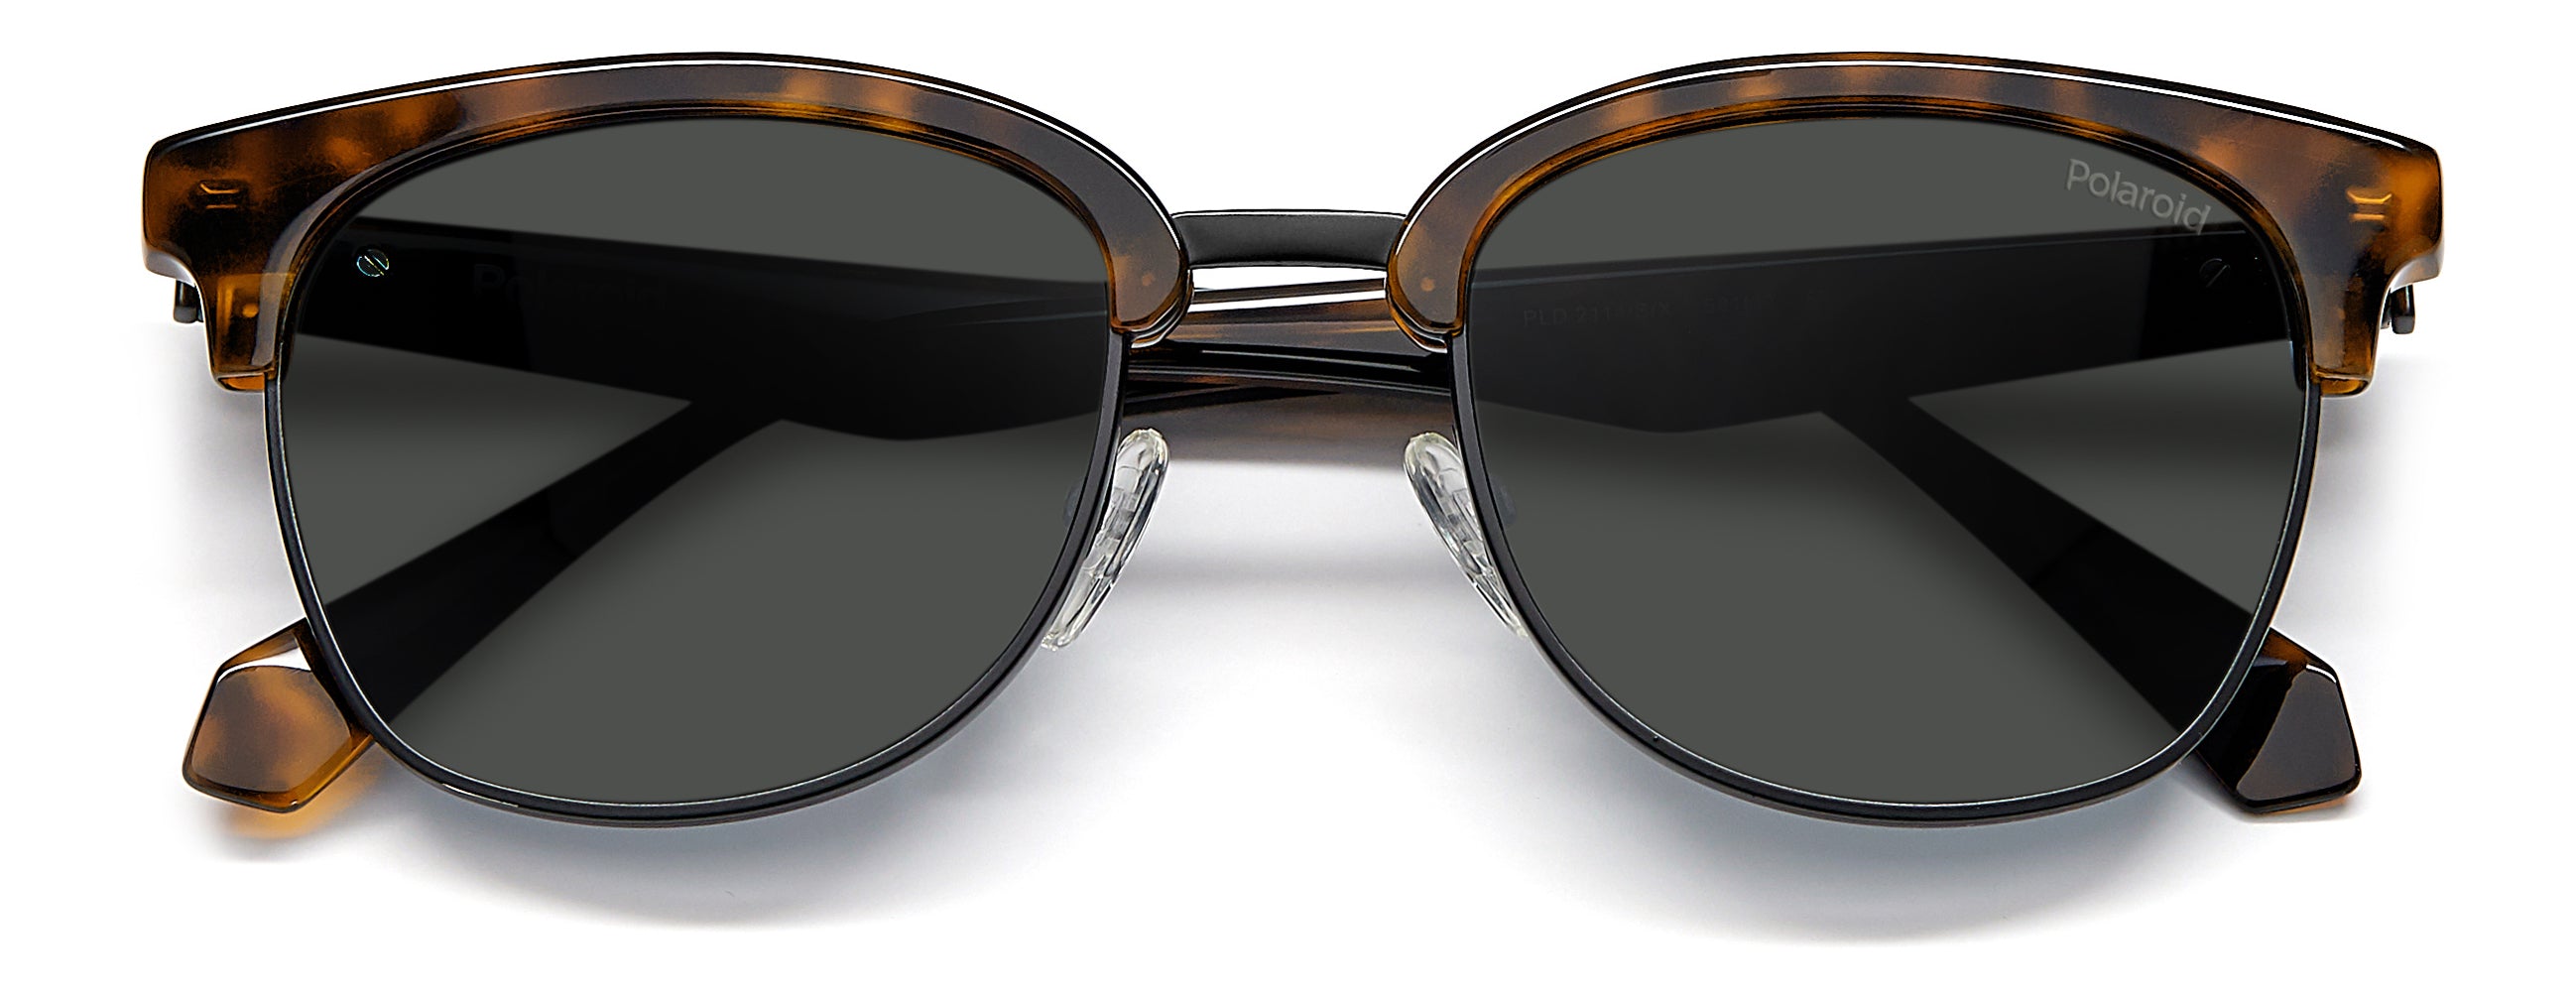 Polaroid Modern Clubmaster Sunglasses